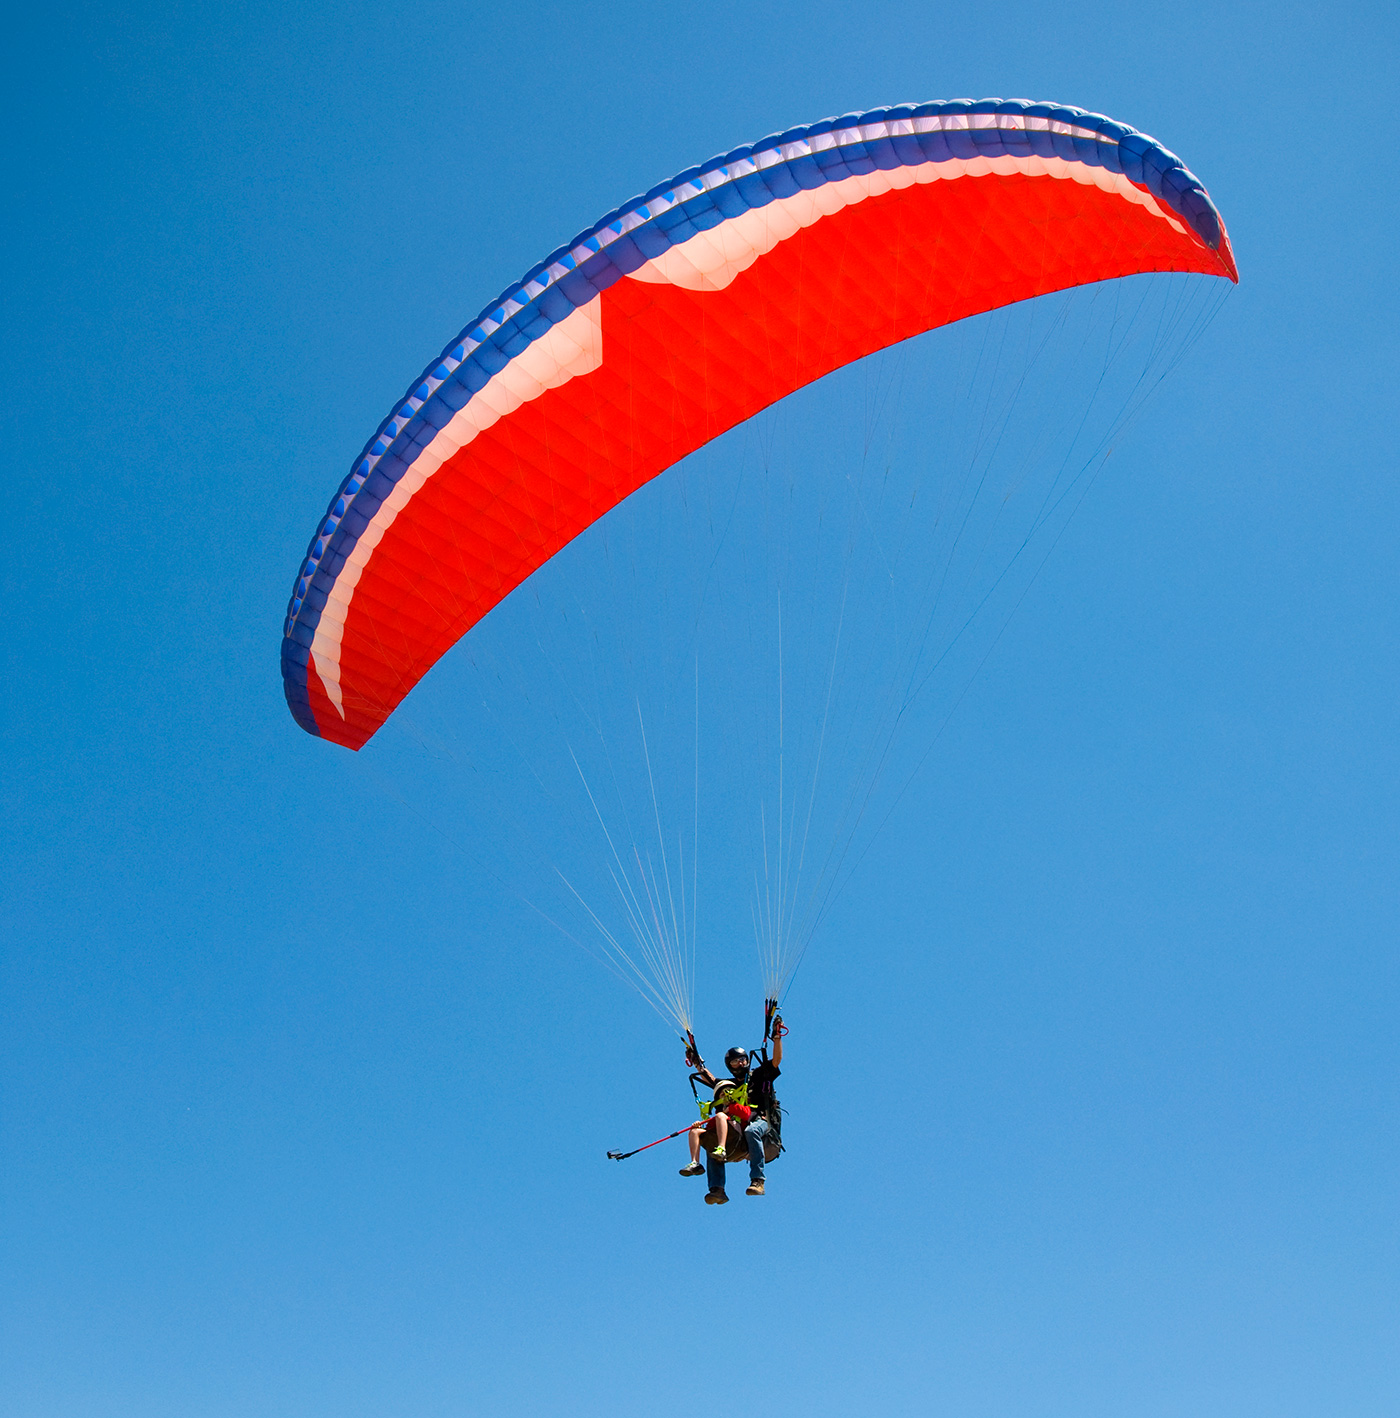 Free Fall Parachute